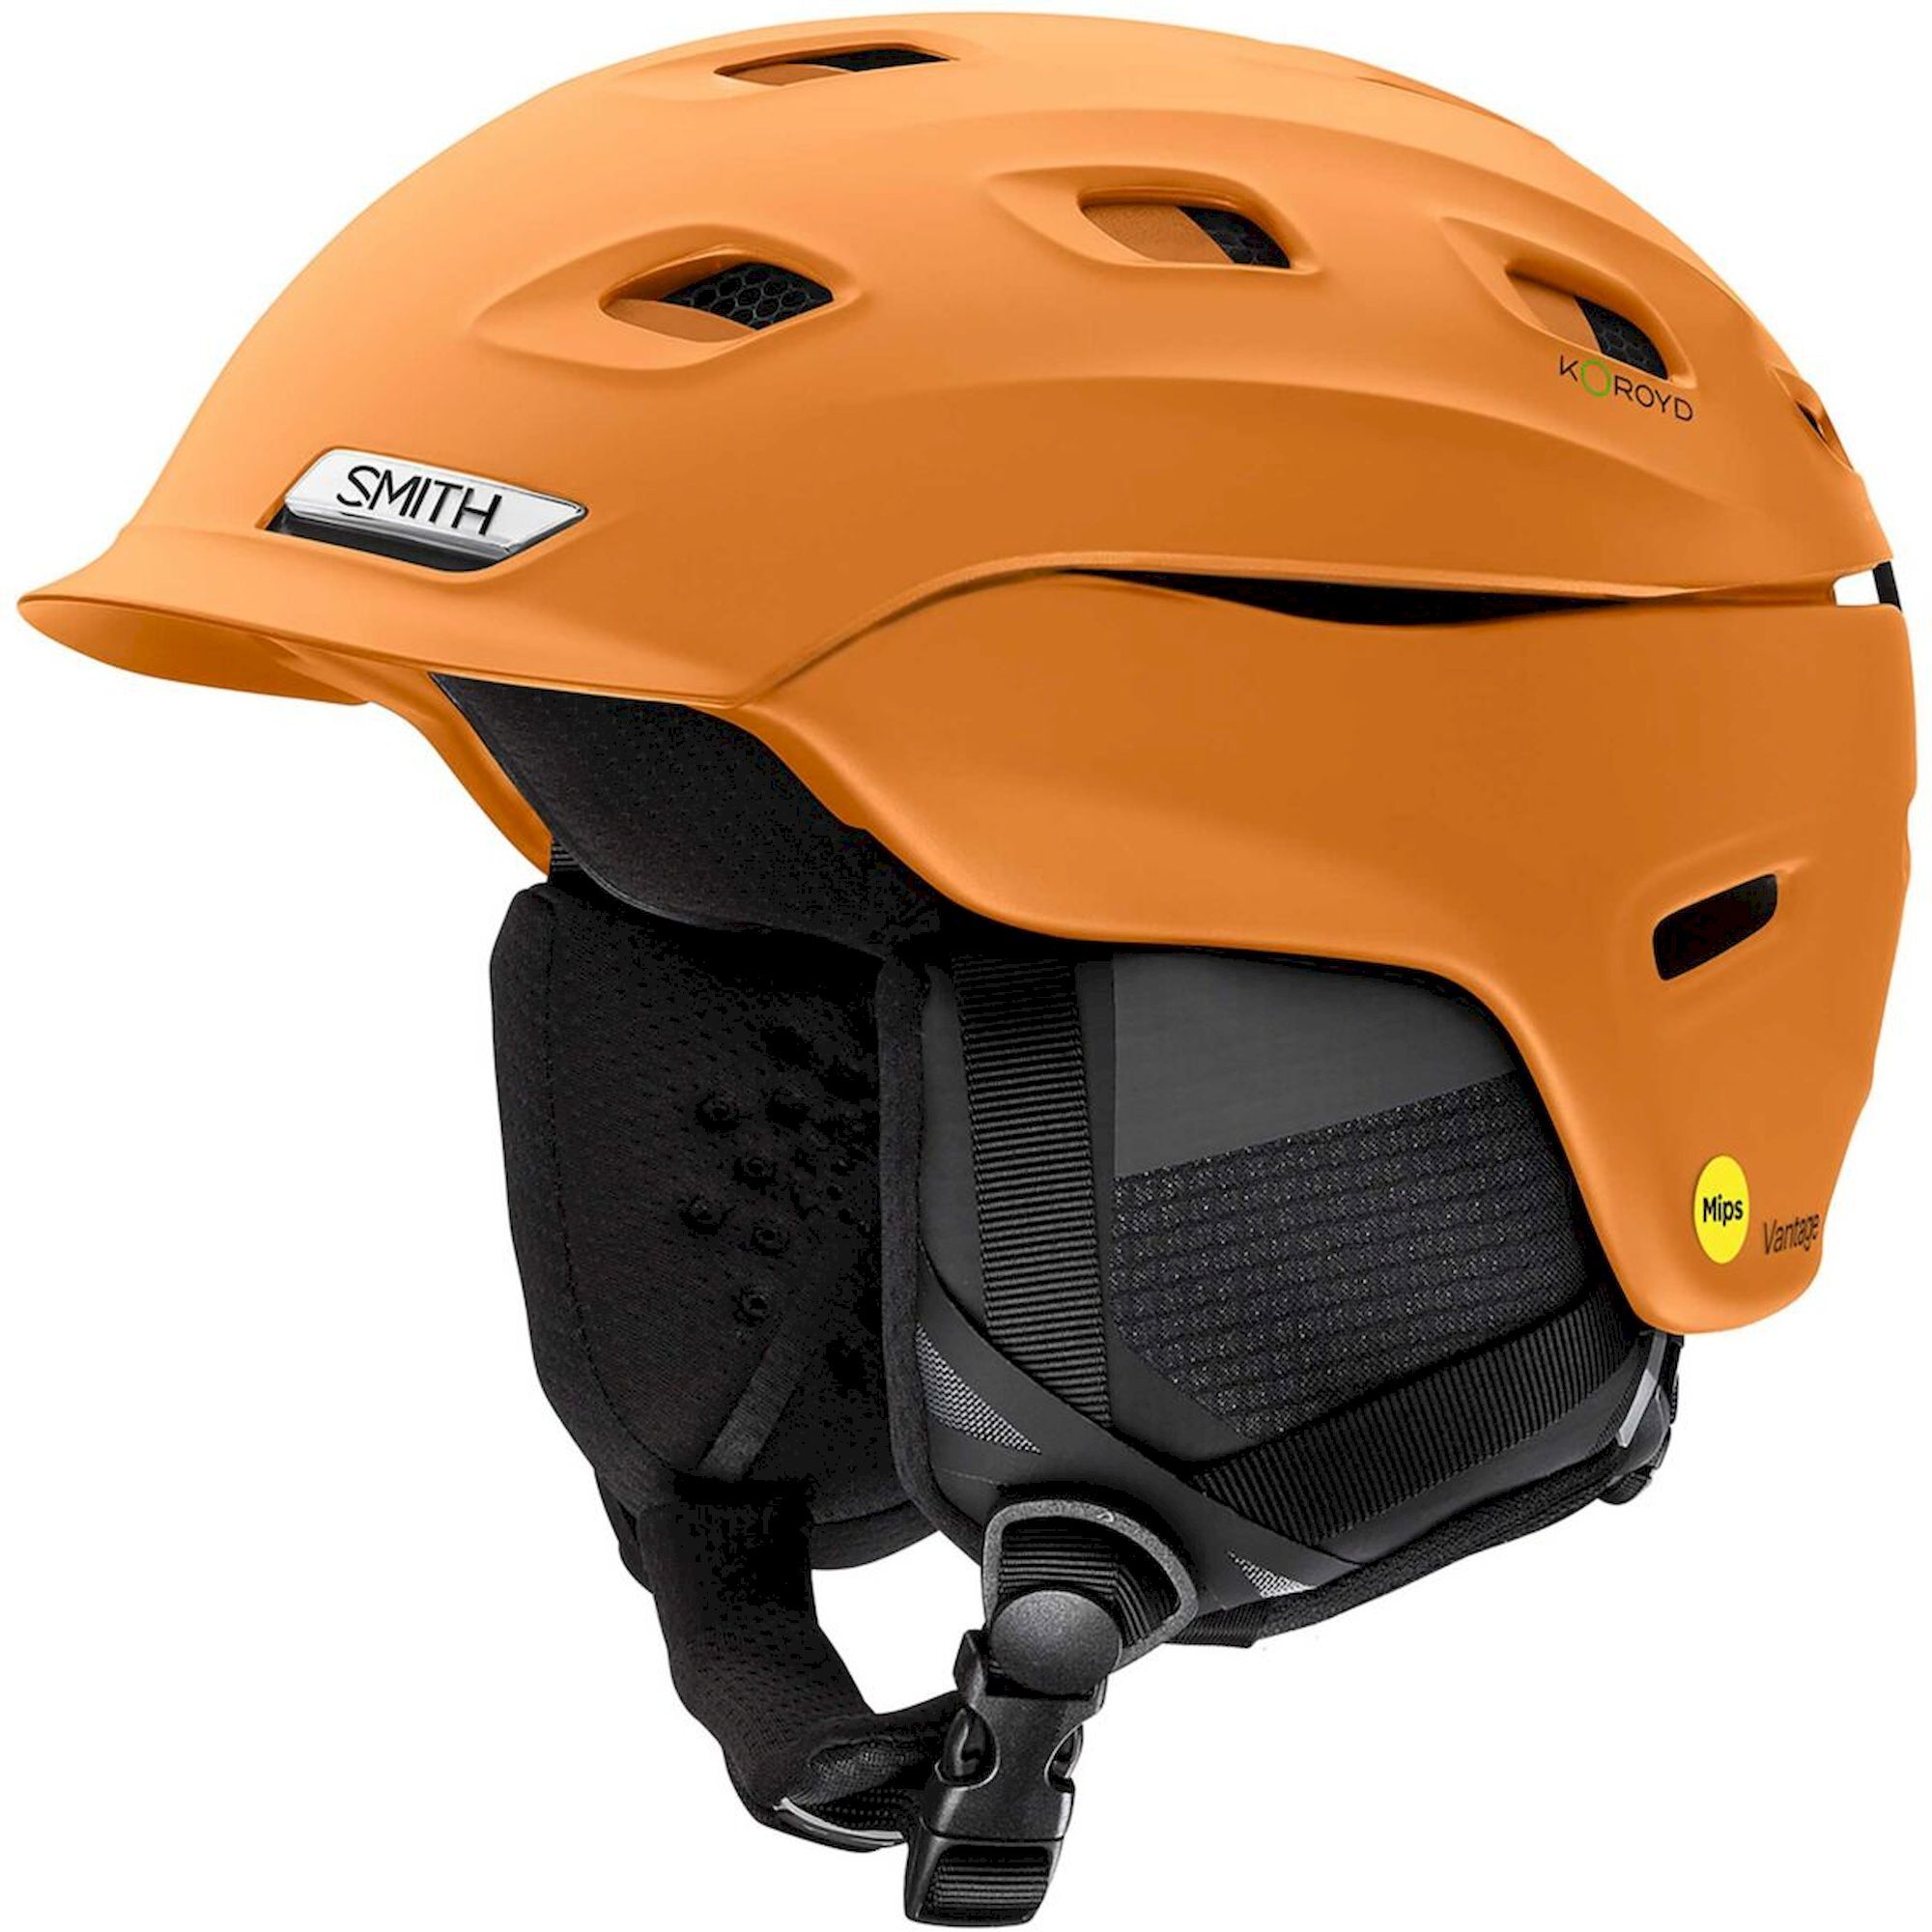 Smith Vantage Mips - Ski helmet - Men's